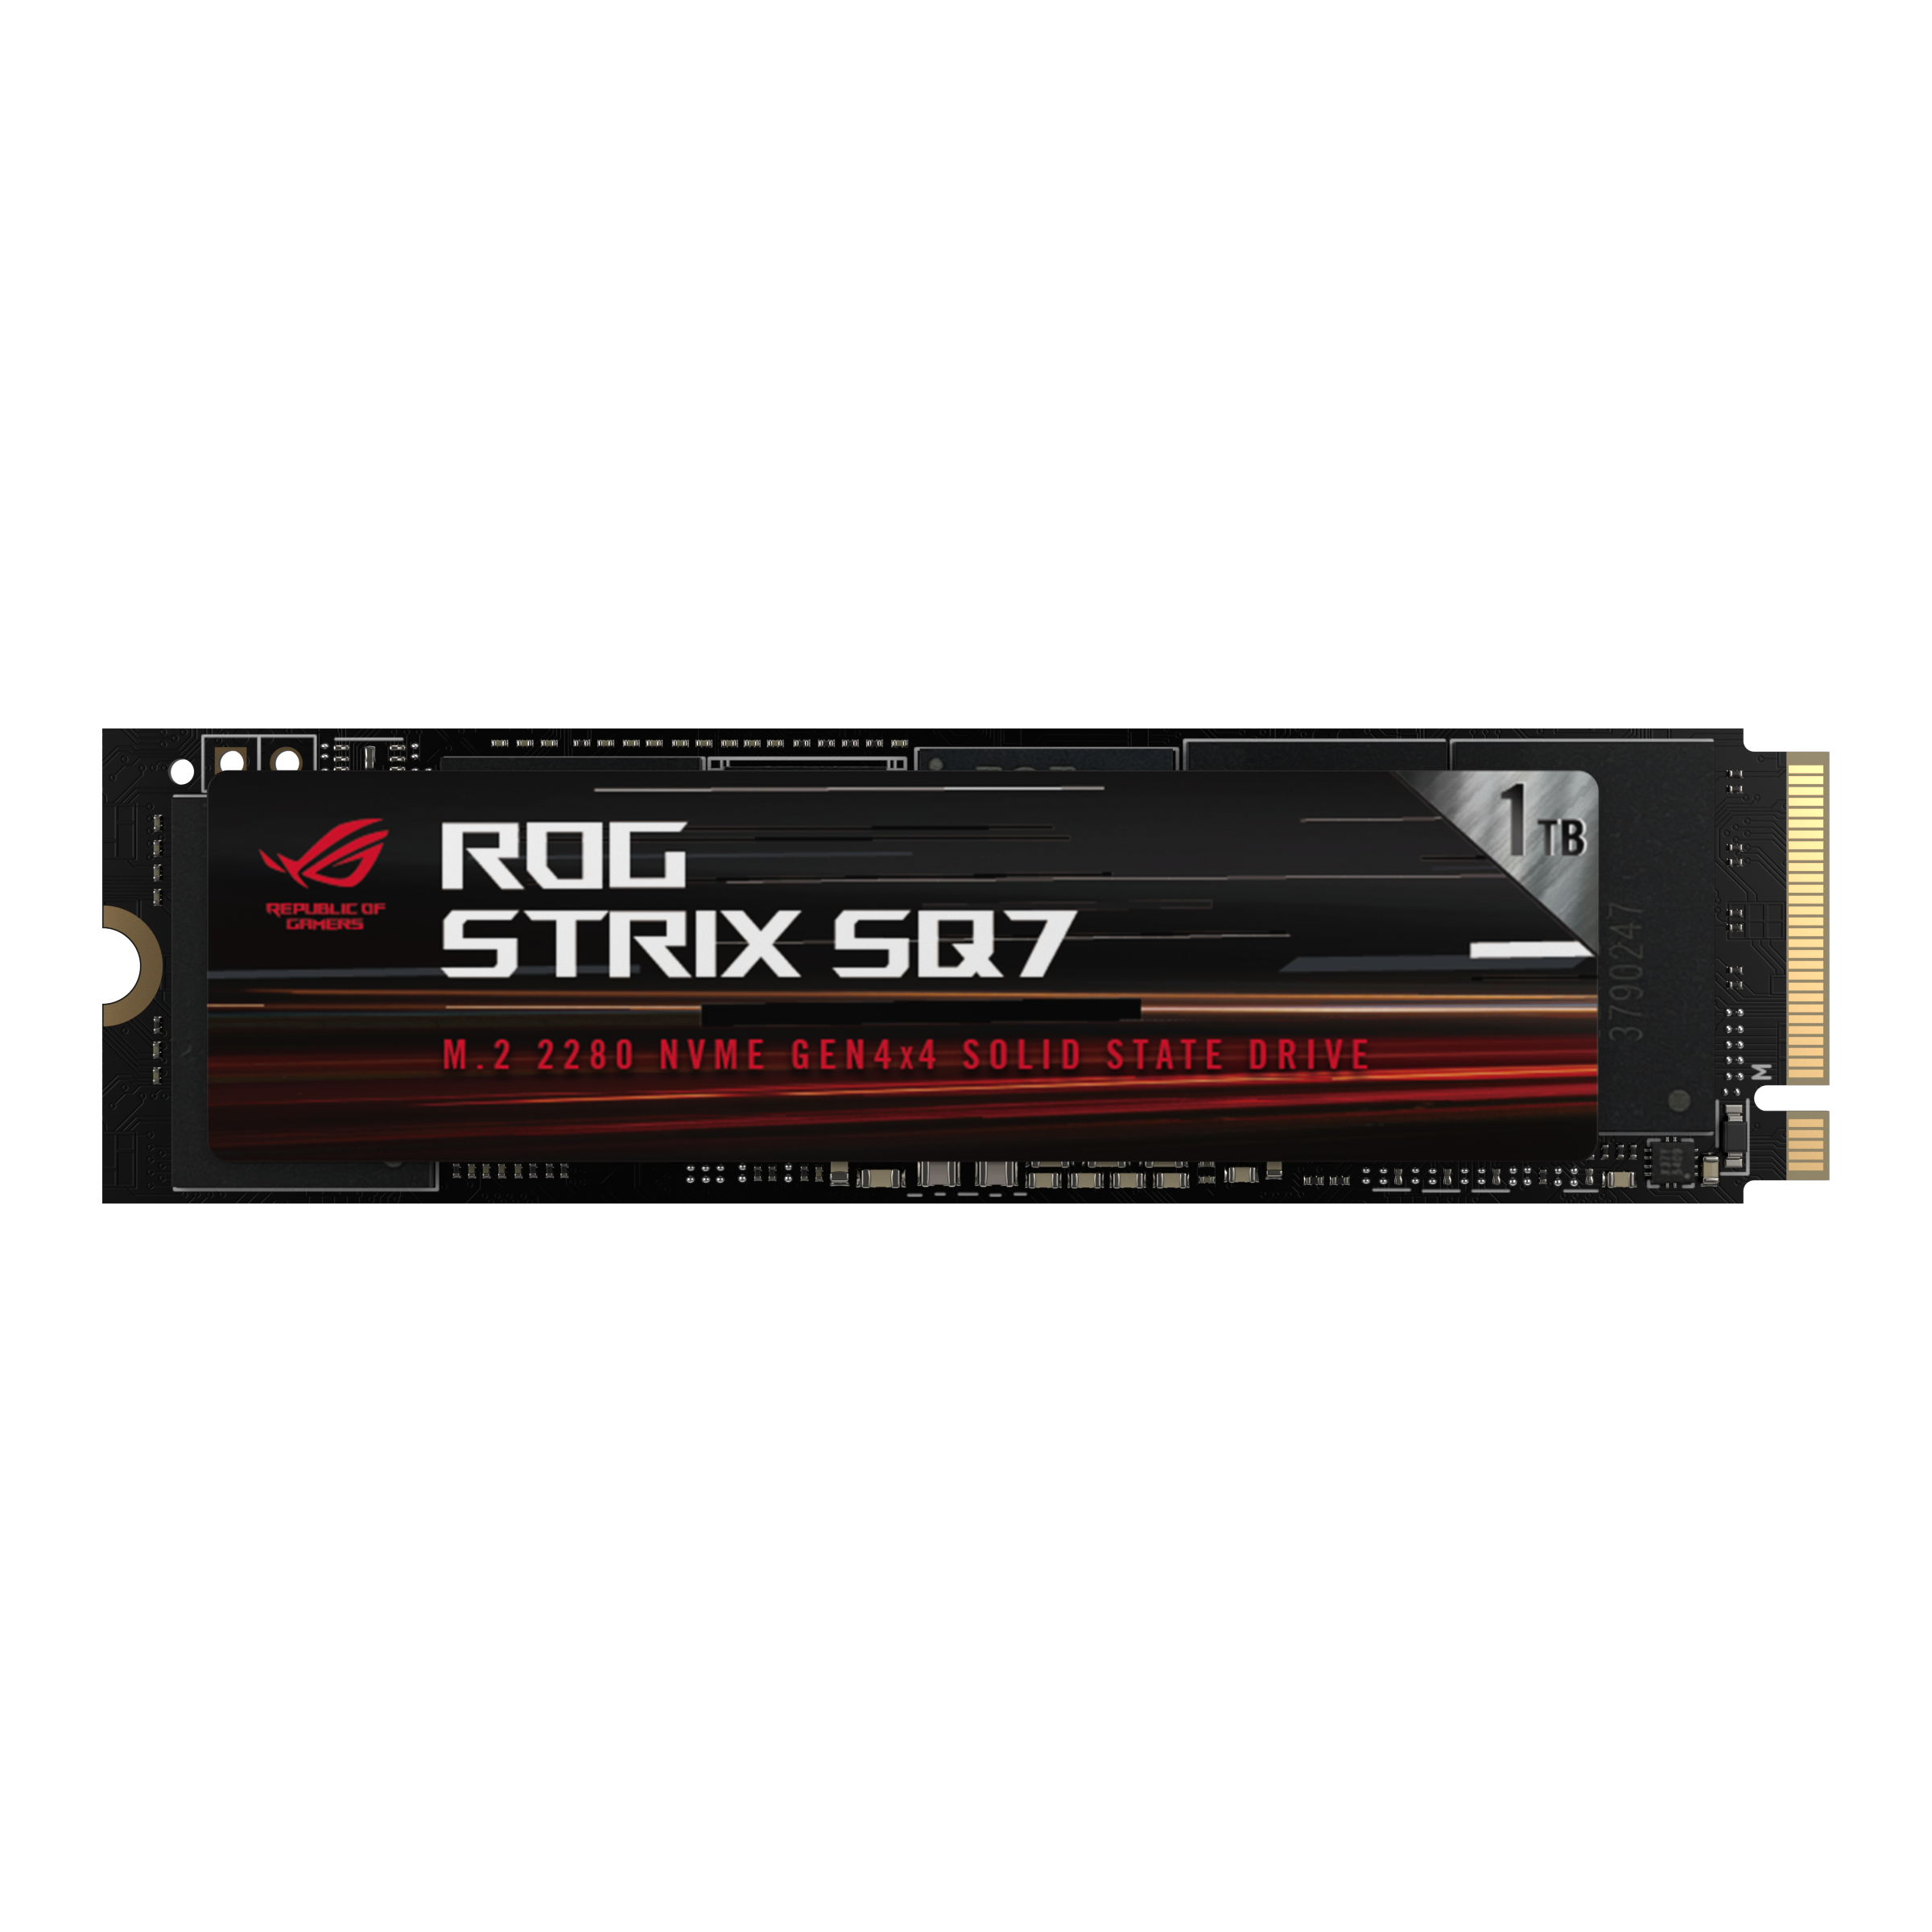 Solid State Drive (SSD) ASUS ROG Strix SQ7, 1TB, NVMe, PCIe Gen4 SSD